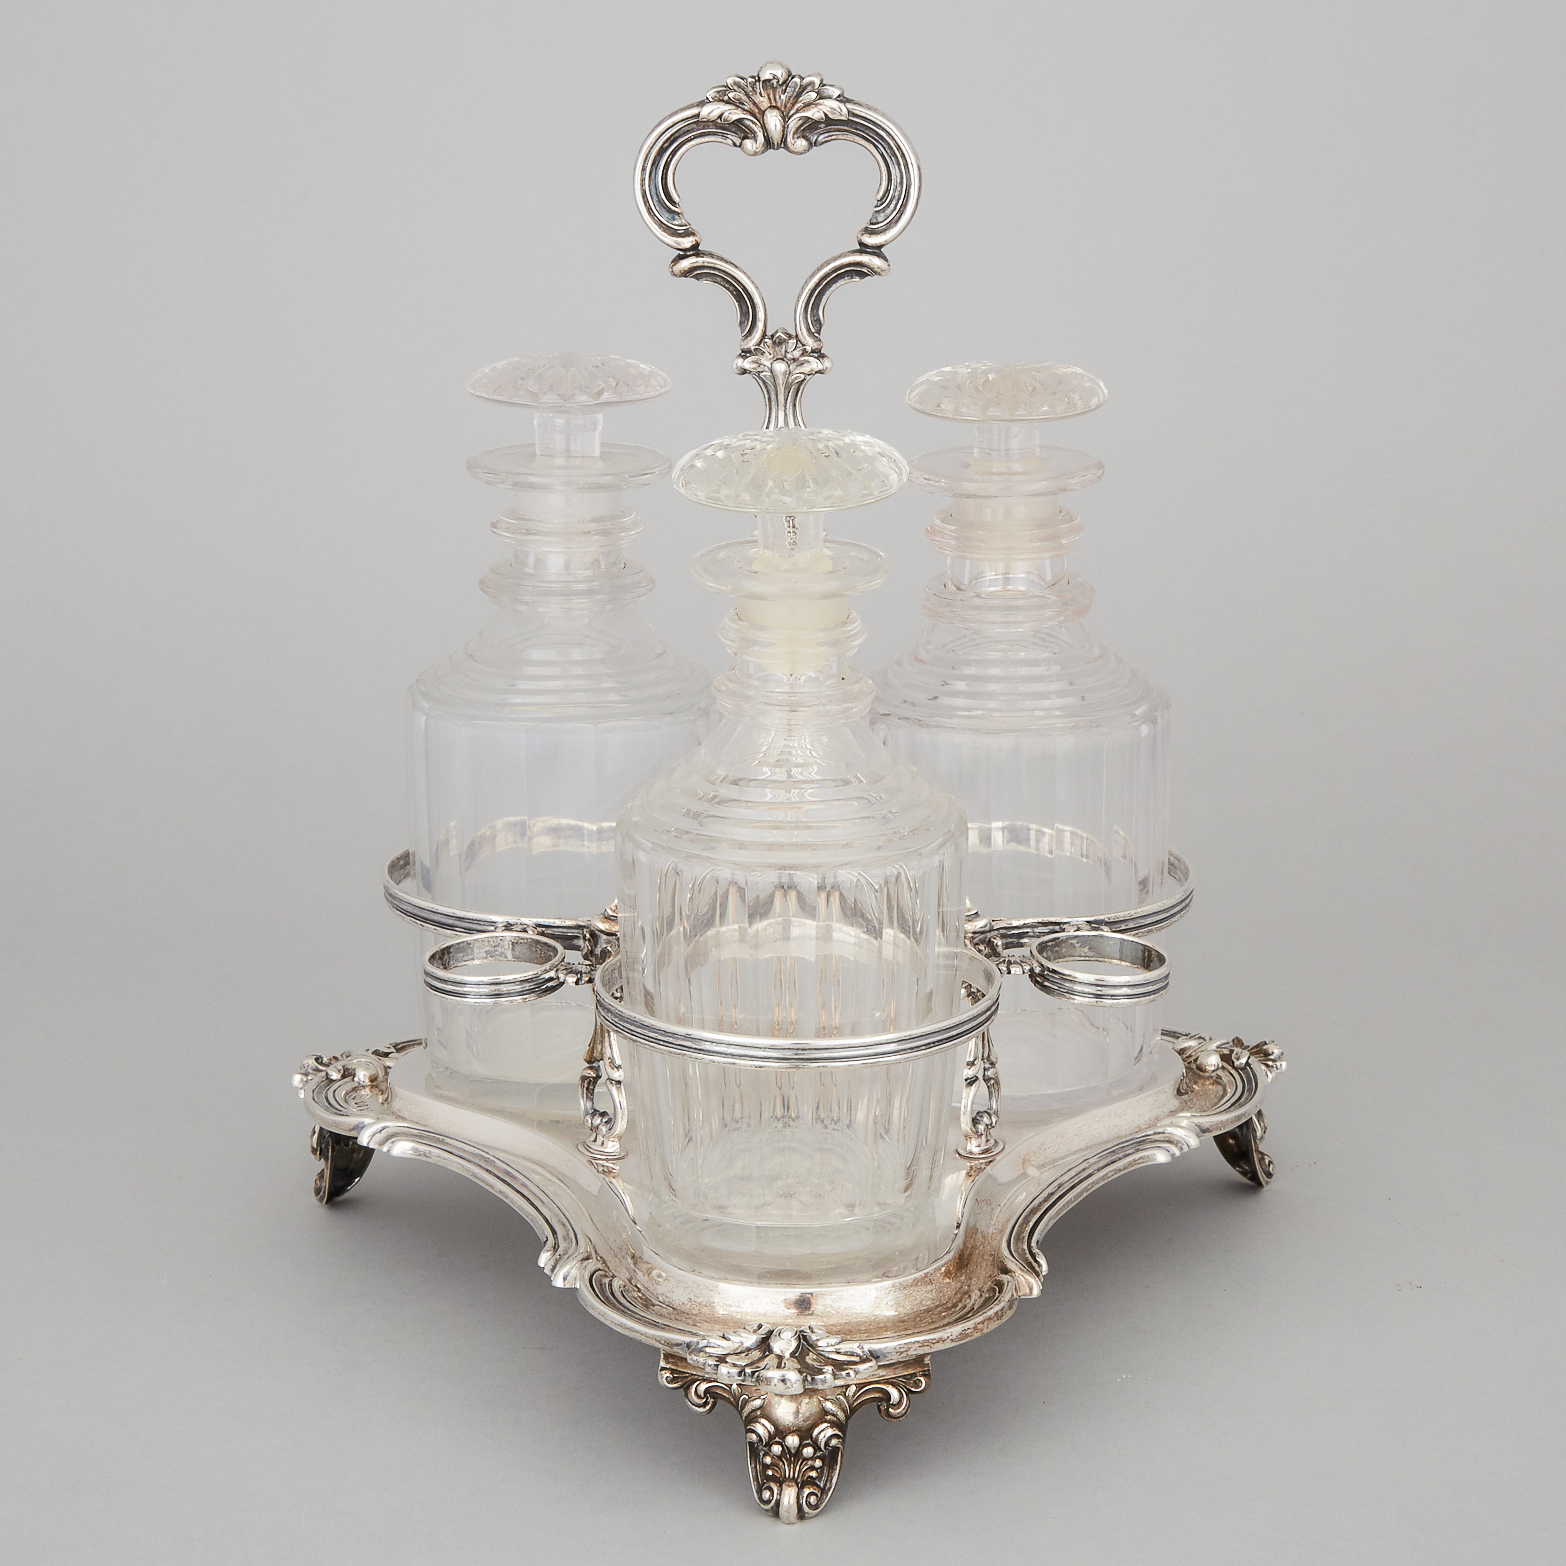 Early Victorian Silver Three-Bottle Tantalus, Joseph & Albert Savory, London, 1837